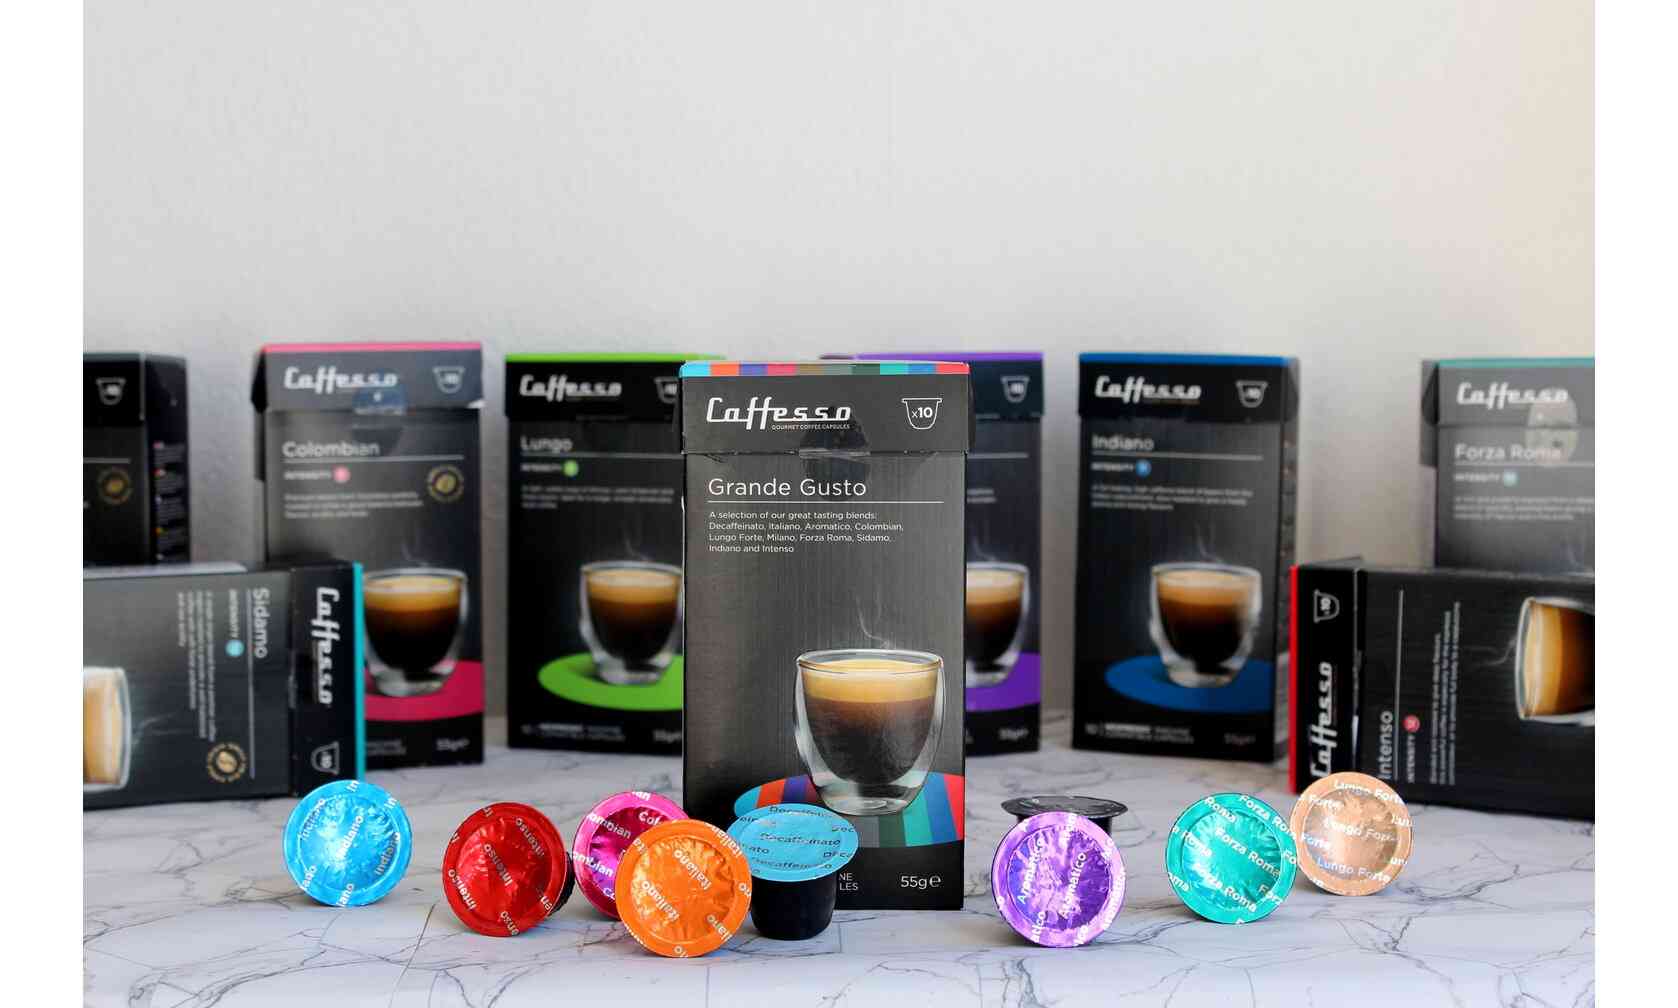 Grande Gusto Caja  Mix Degustación Caffesso compatible Nespresso® - CoffeeLovers Capsulas Nespresso